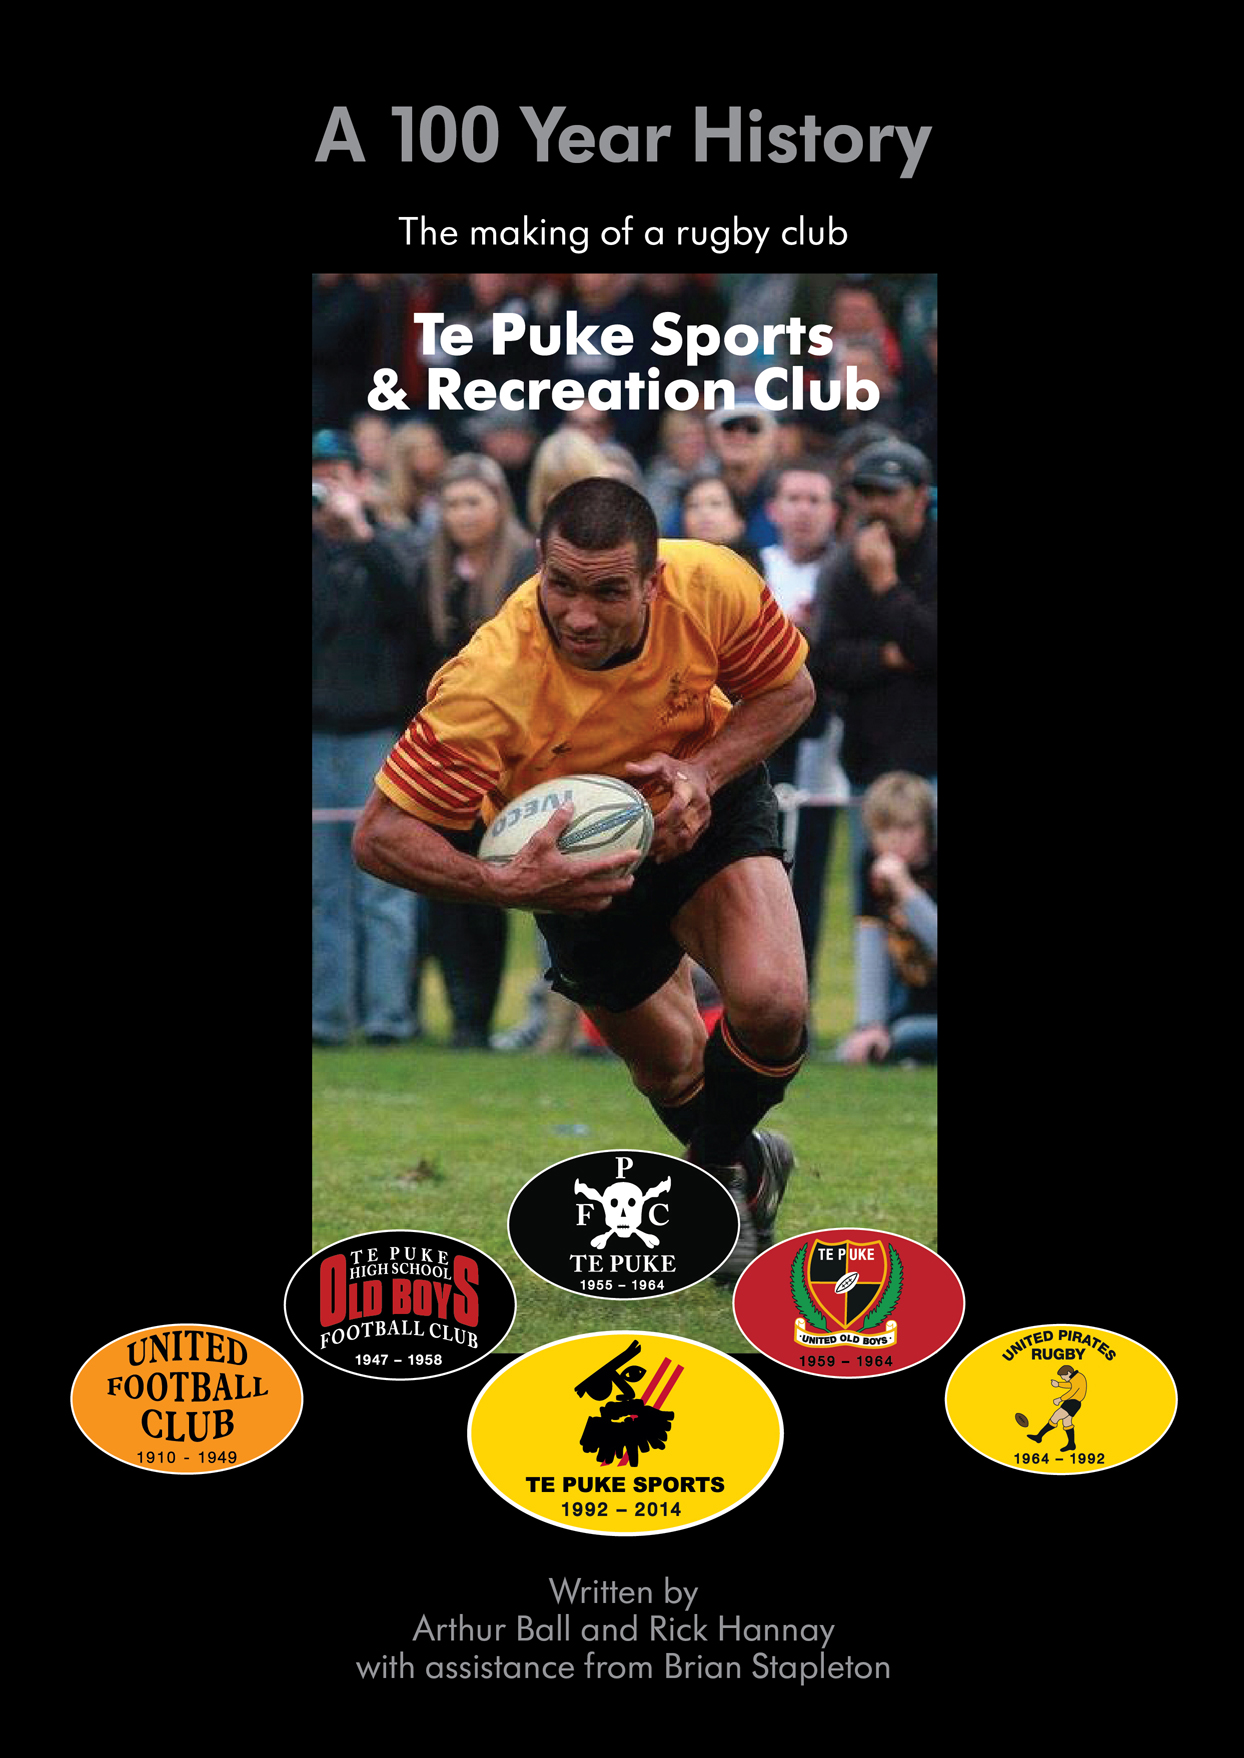 The History of Te Puke Sports & Recreation Club